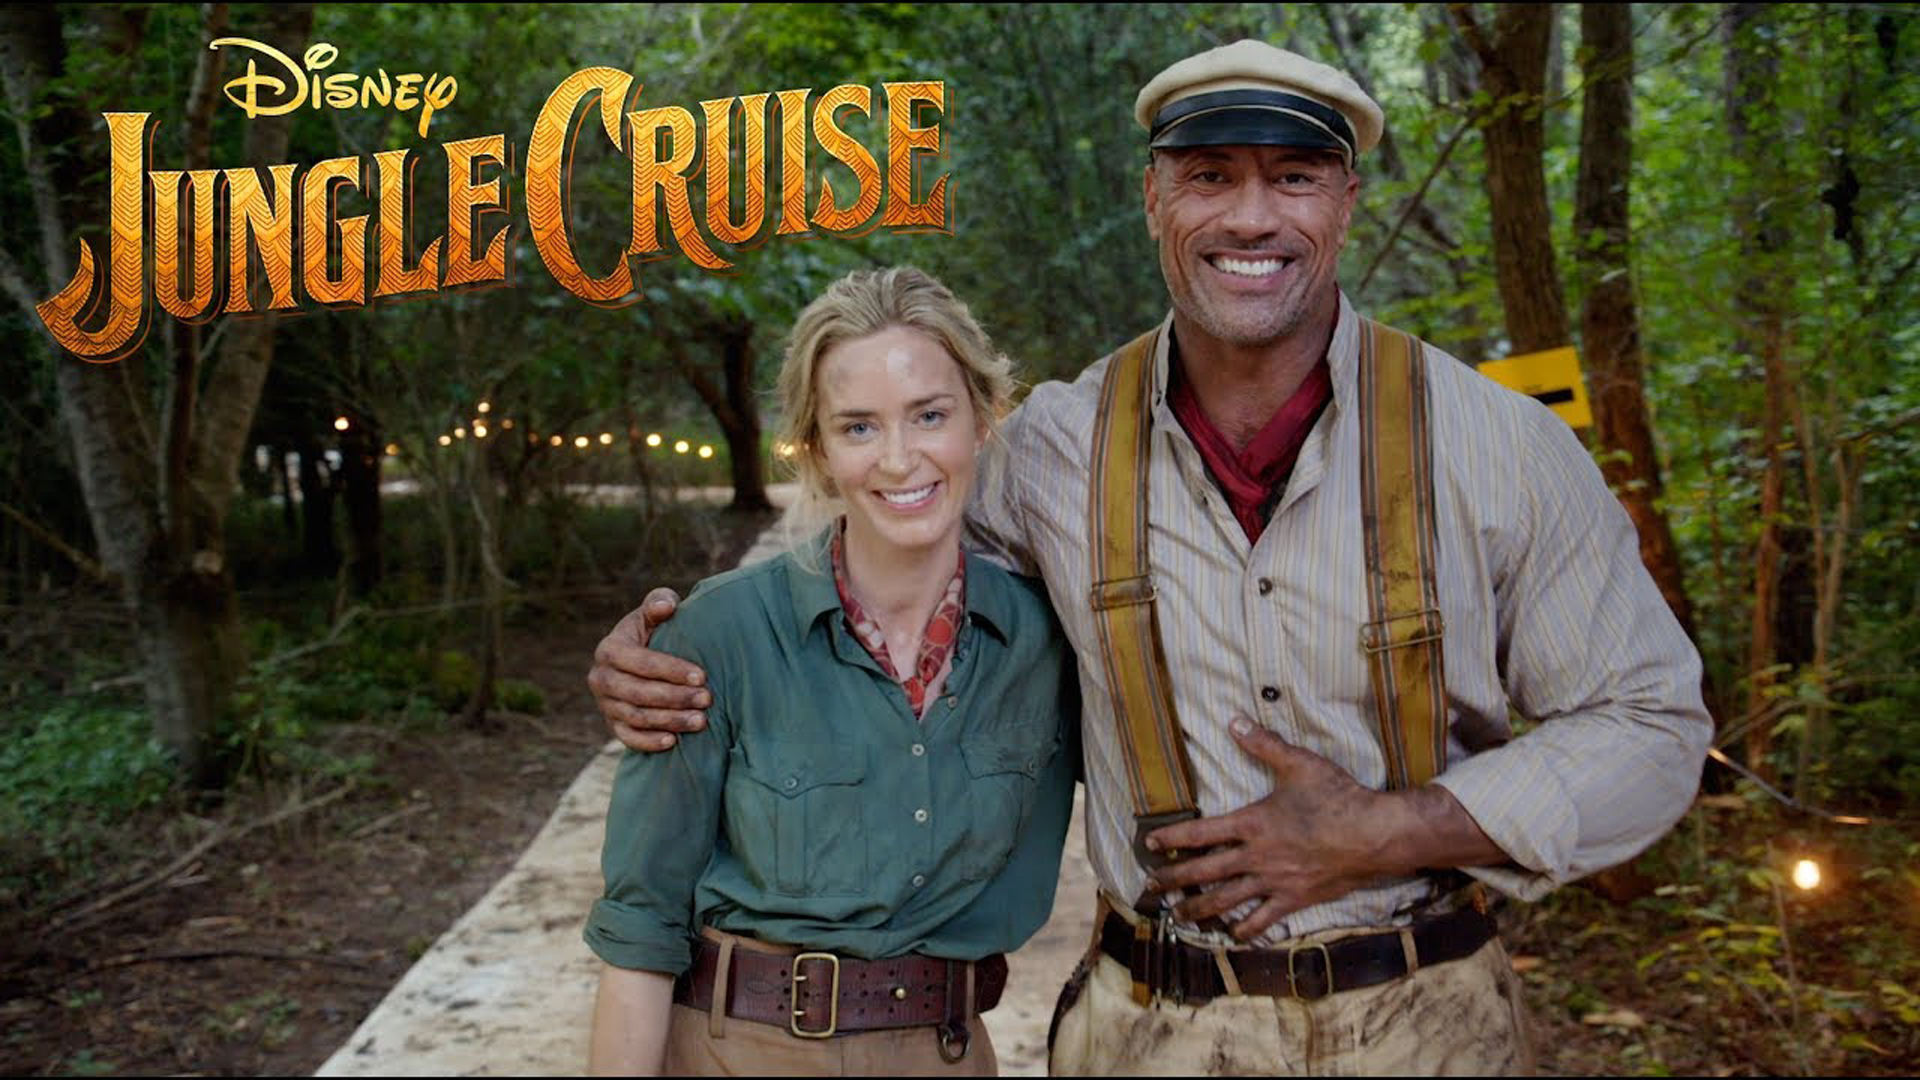 Dwayne Johnson Emily Blunt 2K Jungle Cruise